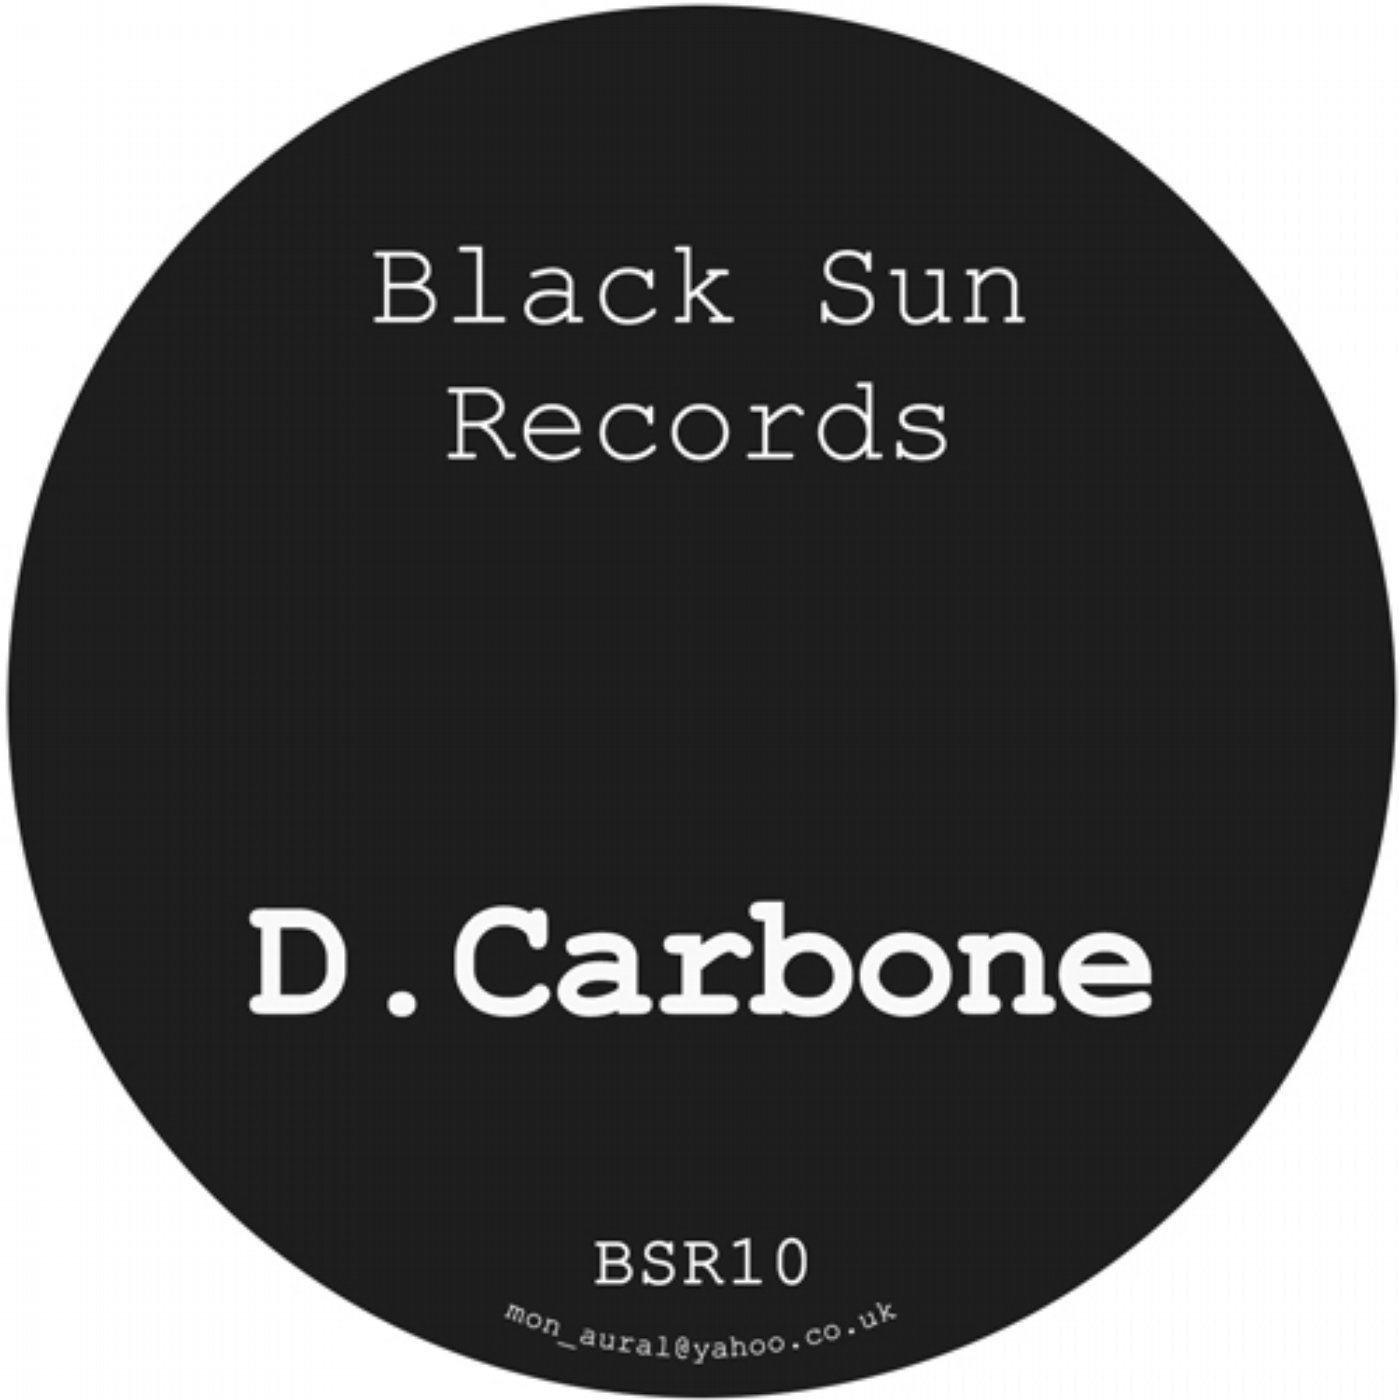 Black san. Black_1sun. Jo feat. Carbone. Black Suns перевод. Black_1sun Dr.